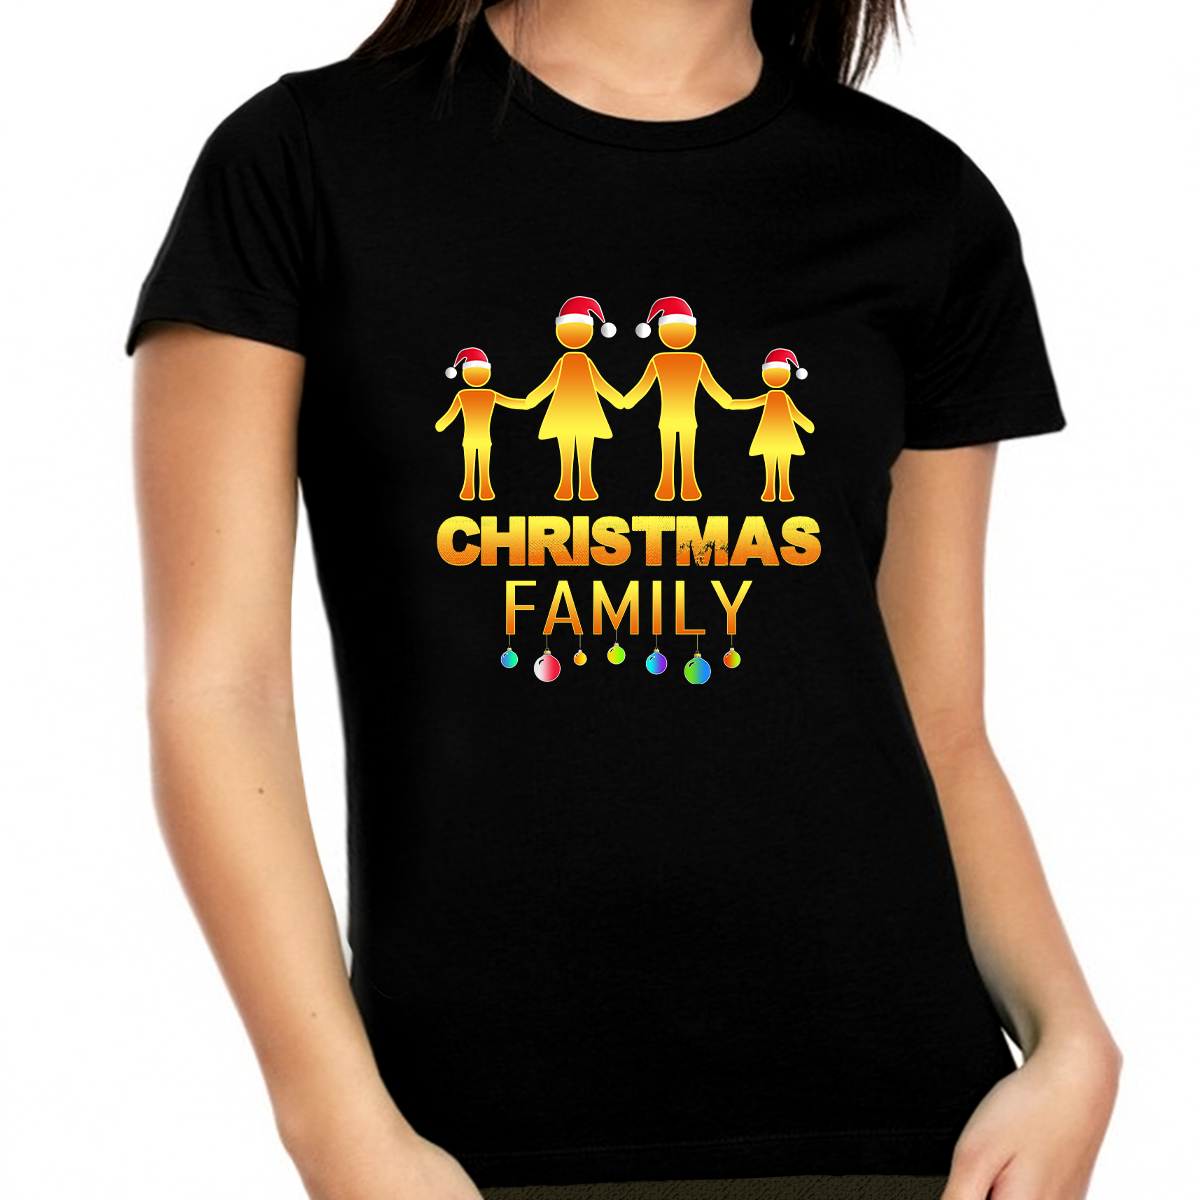 Cute Plus Size Christmas Shirts for Women Family Christmas Shirts for Family Shirts Christmas Shirt